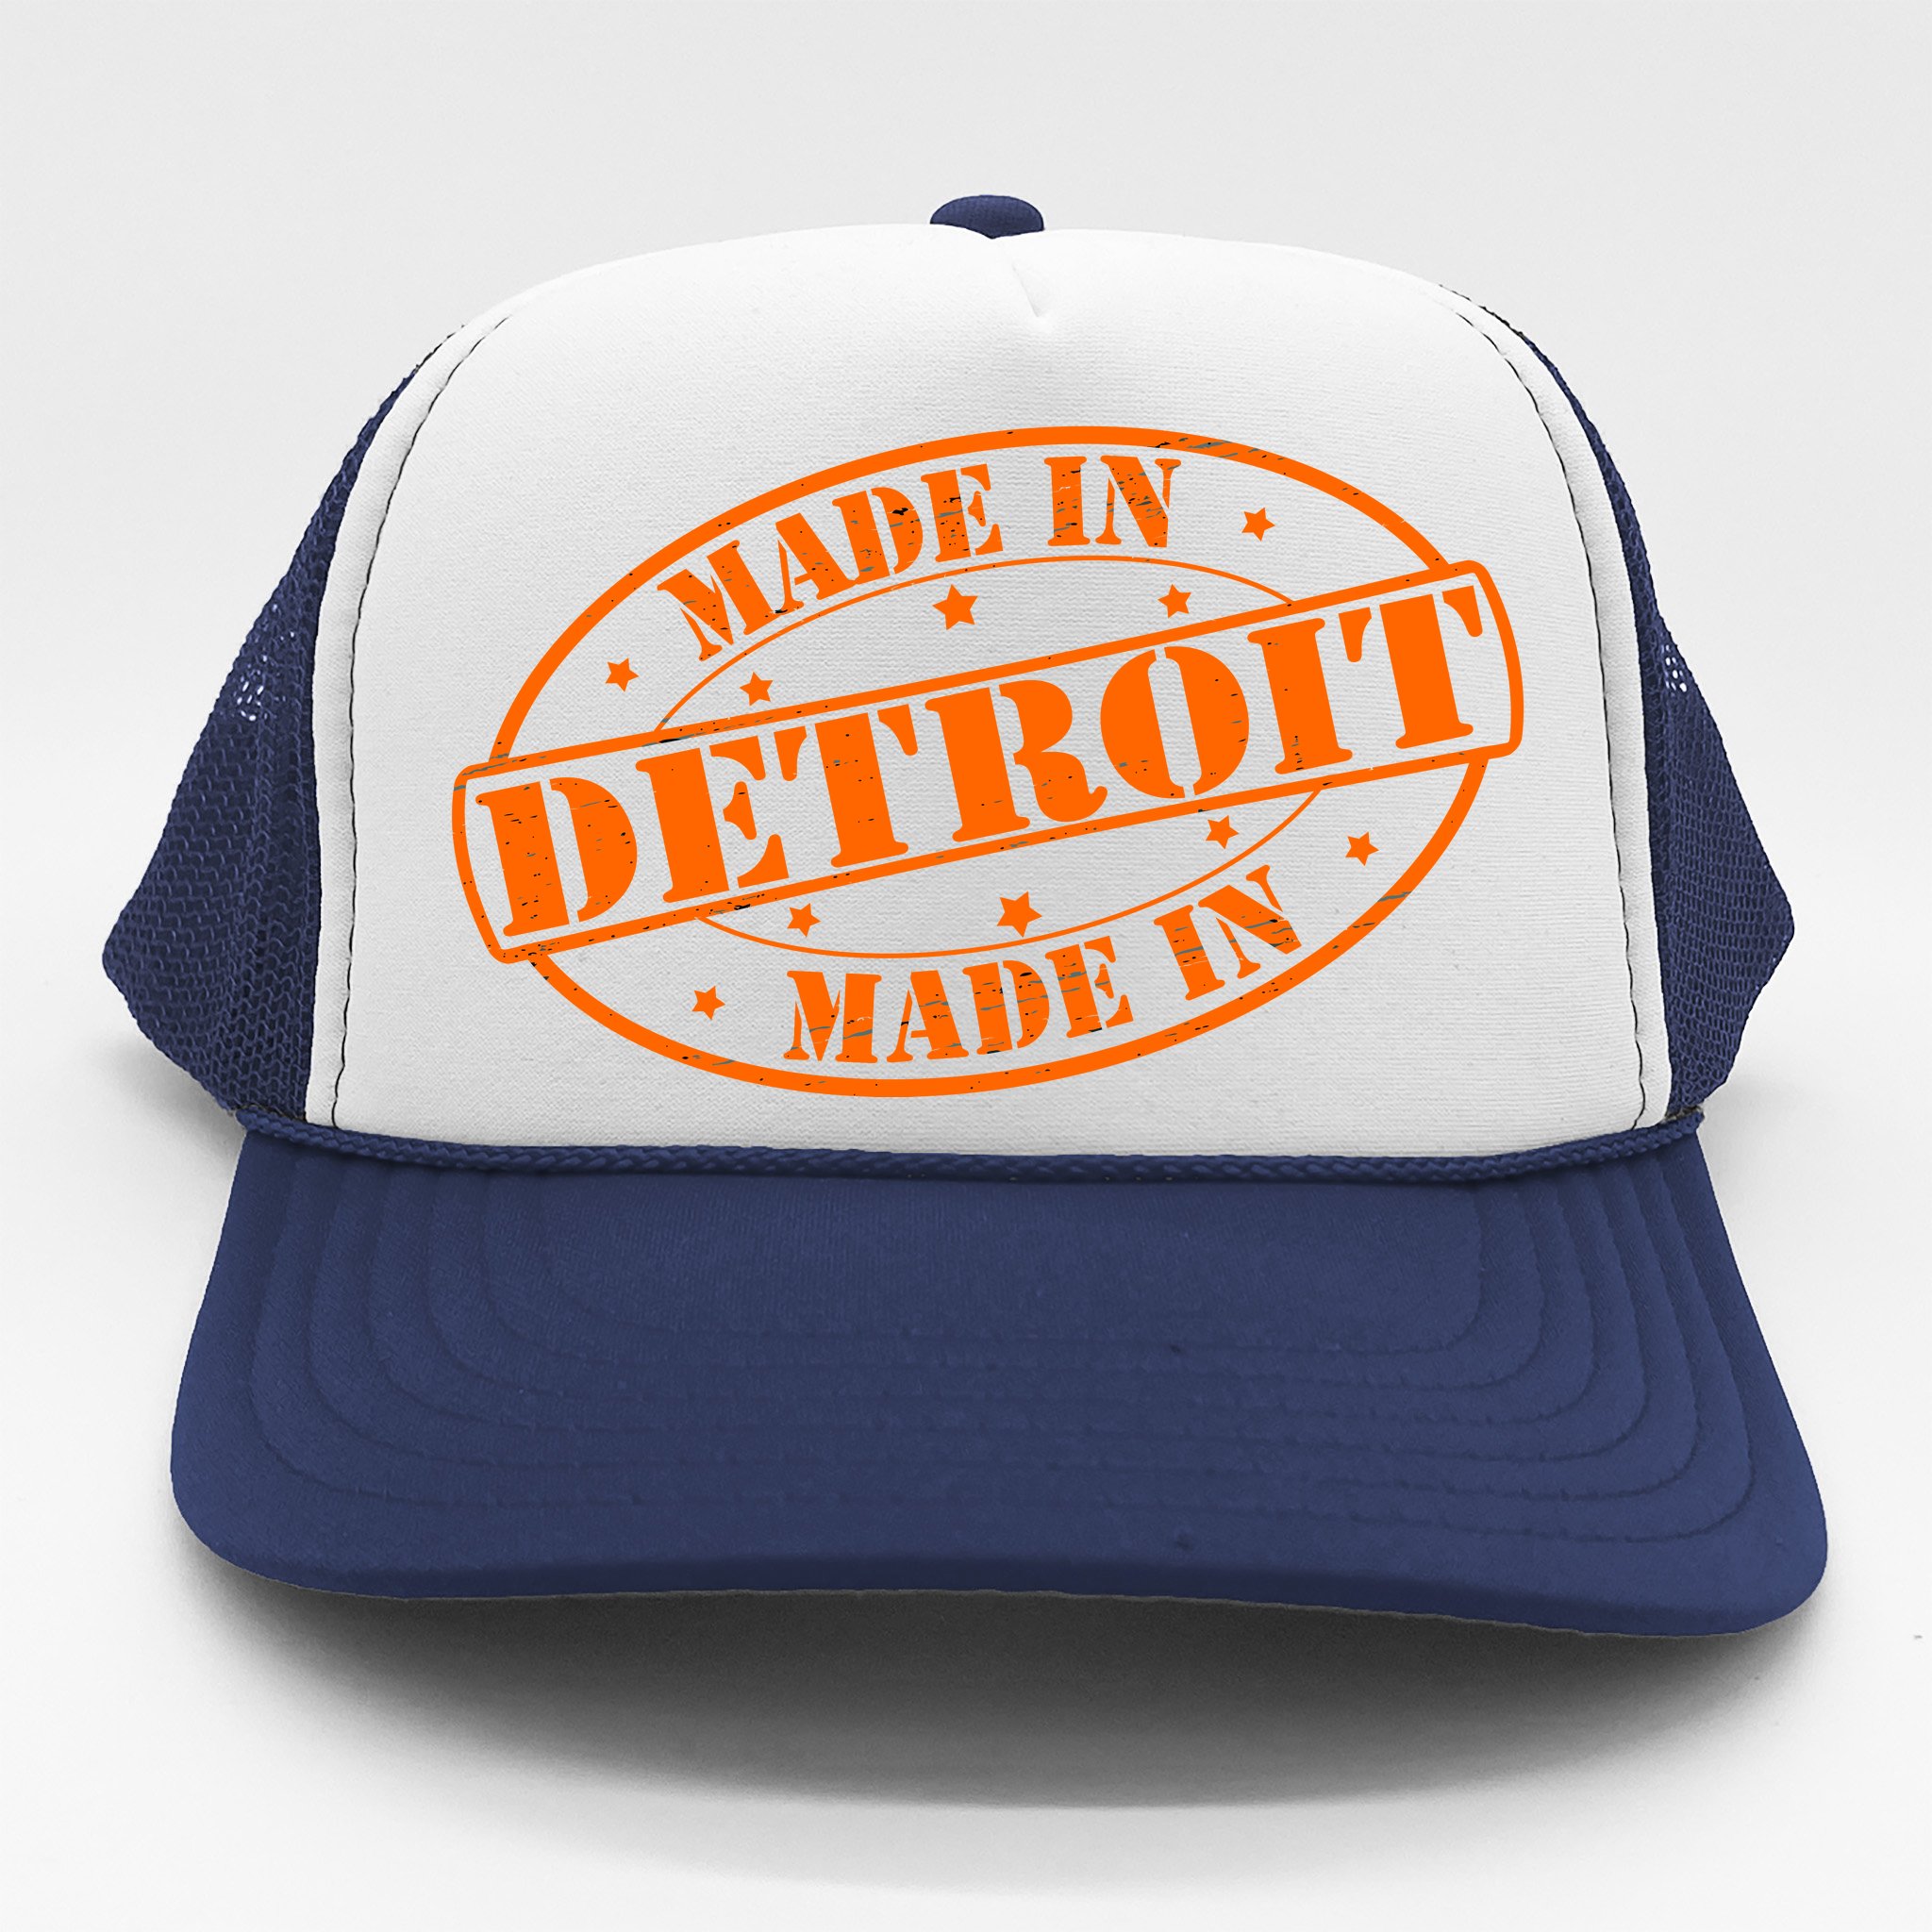 Made In Detroit Trucker Hat